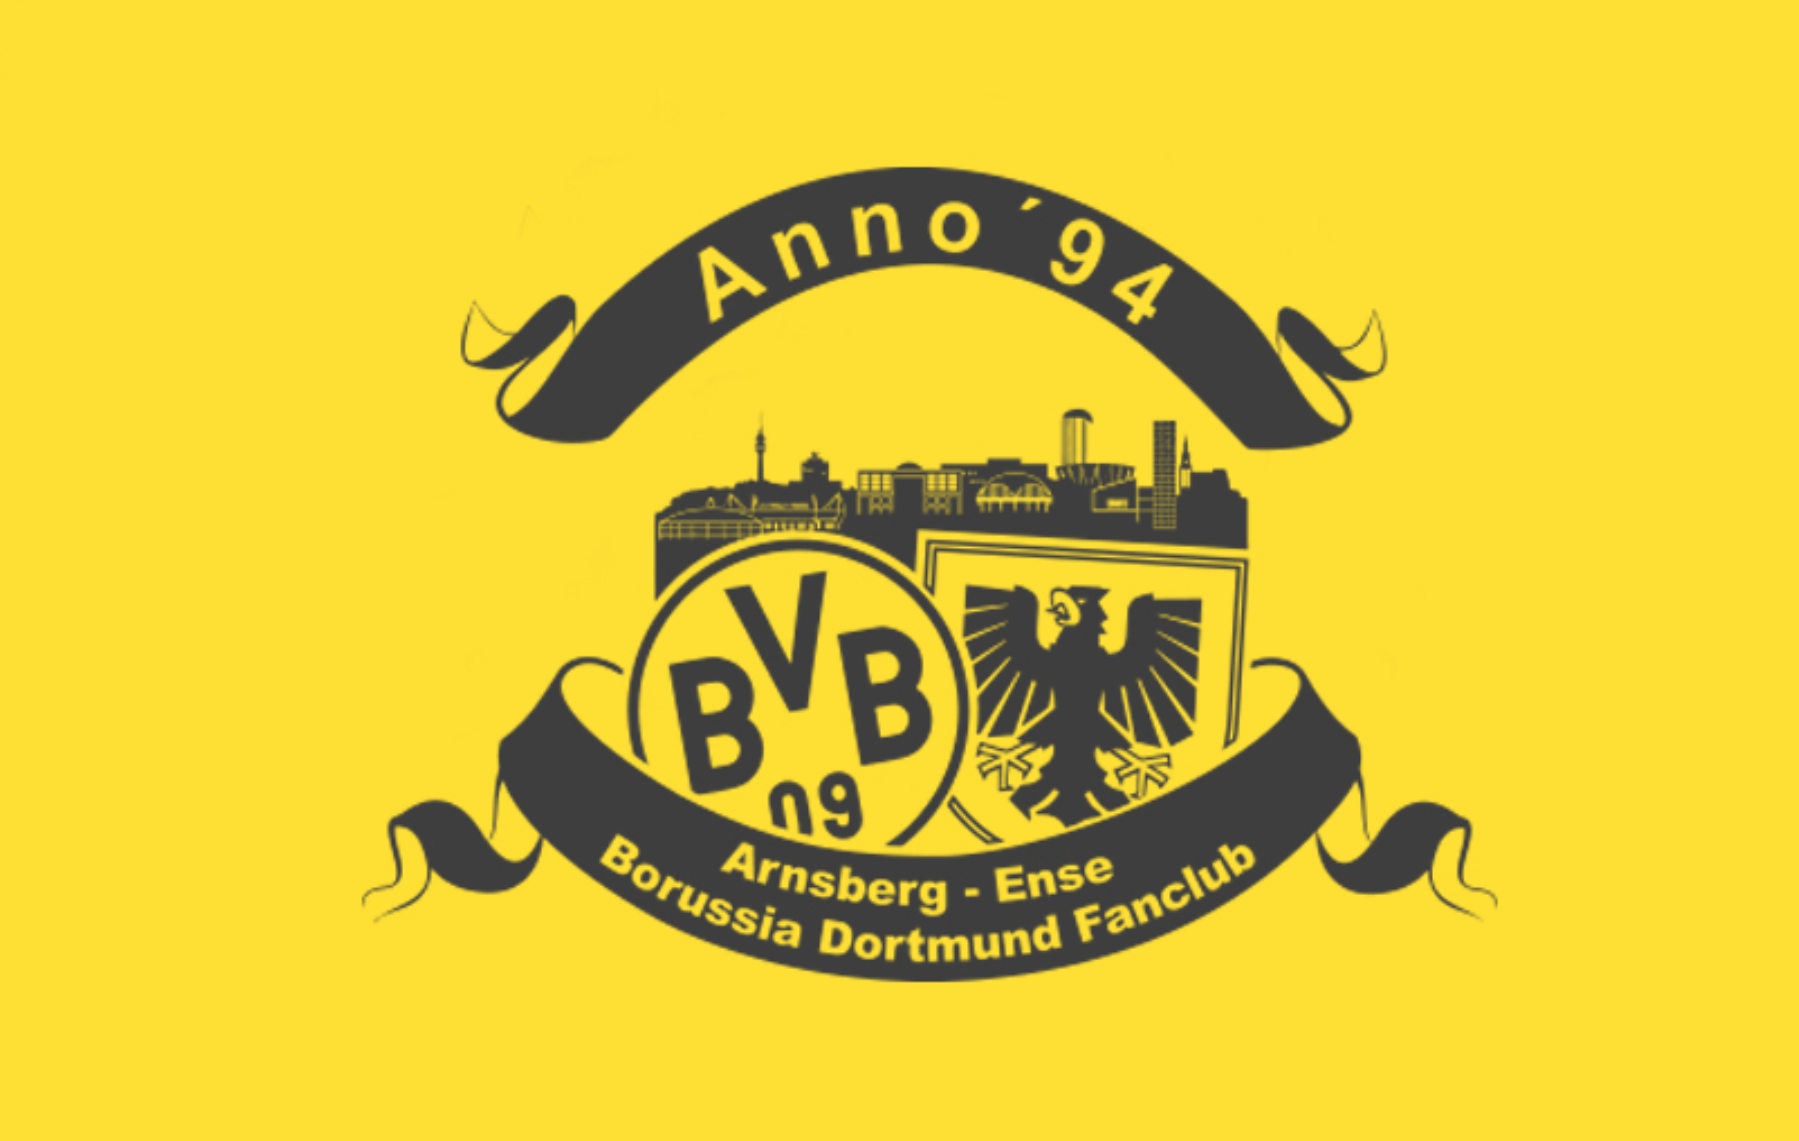 (c) Bvb-fanclub-anno94.de